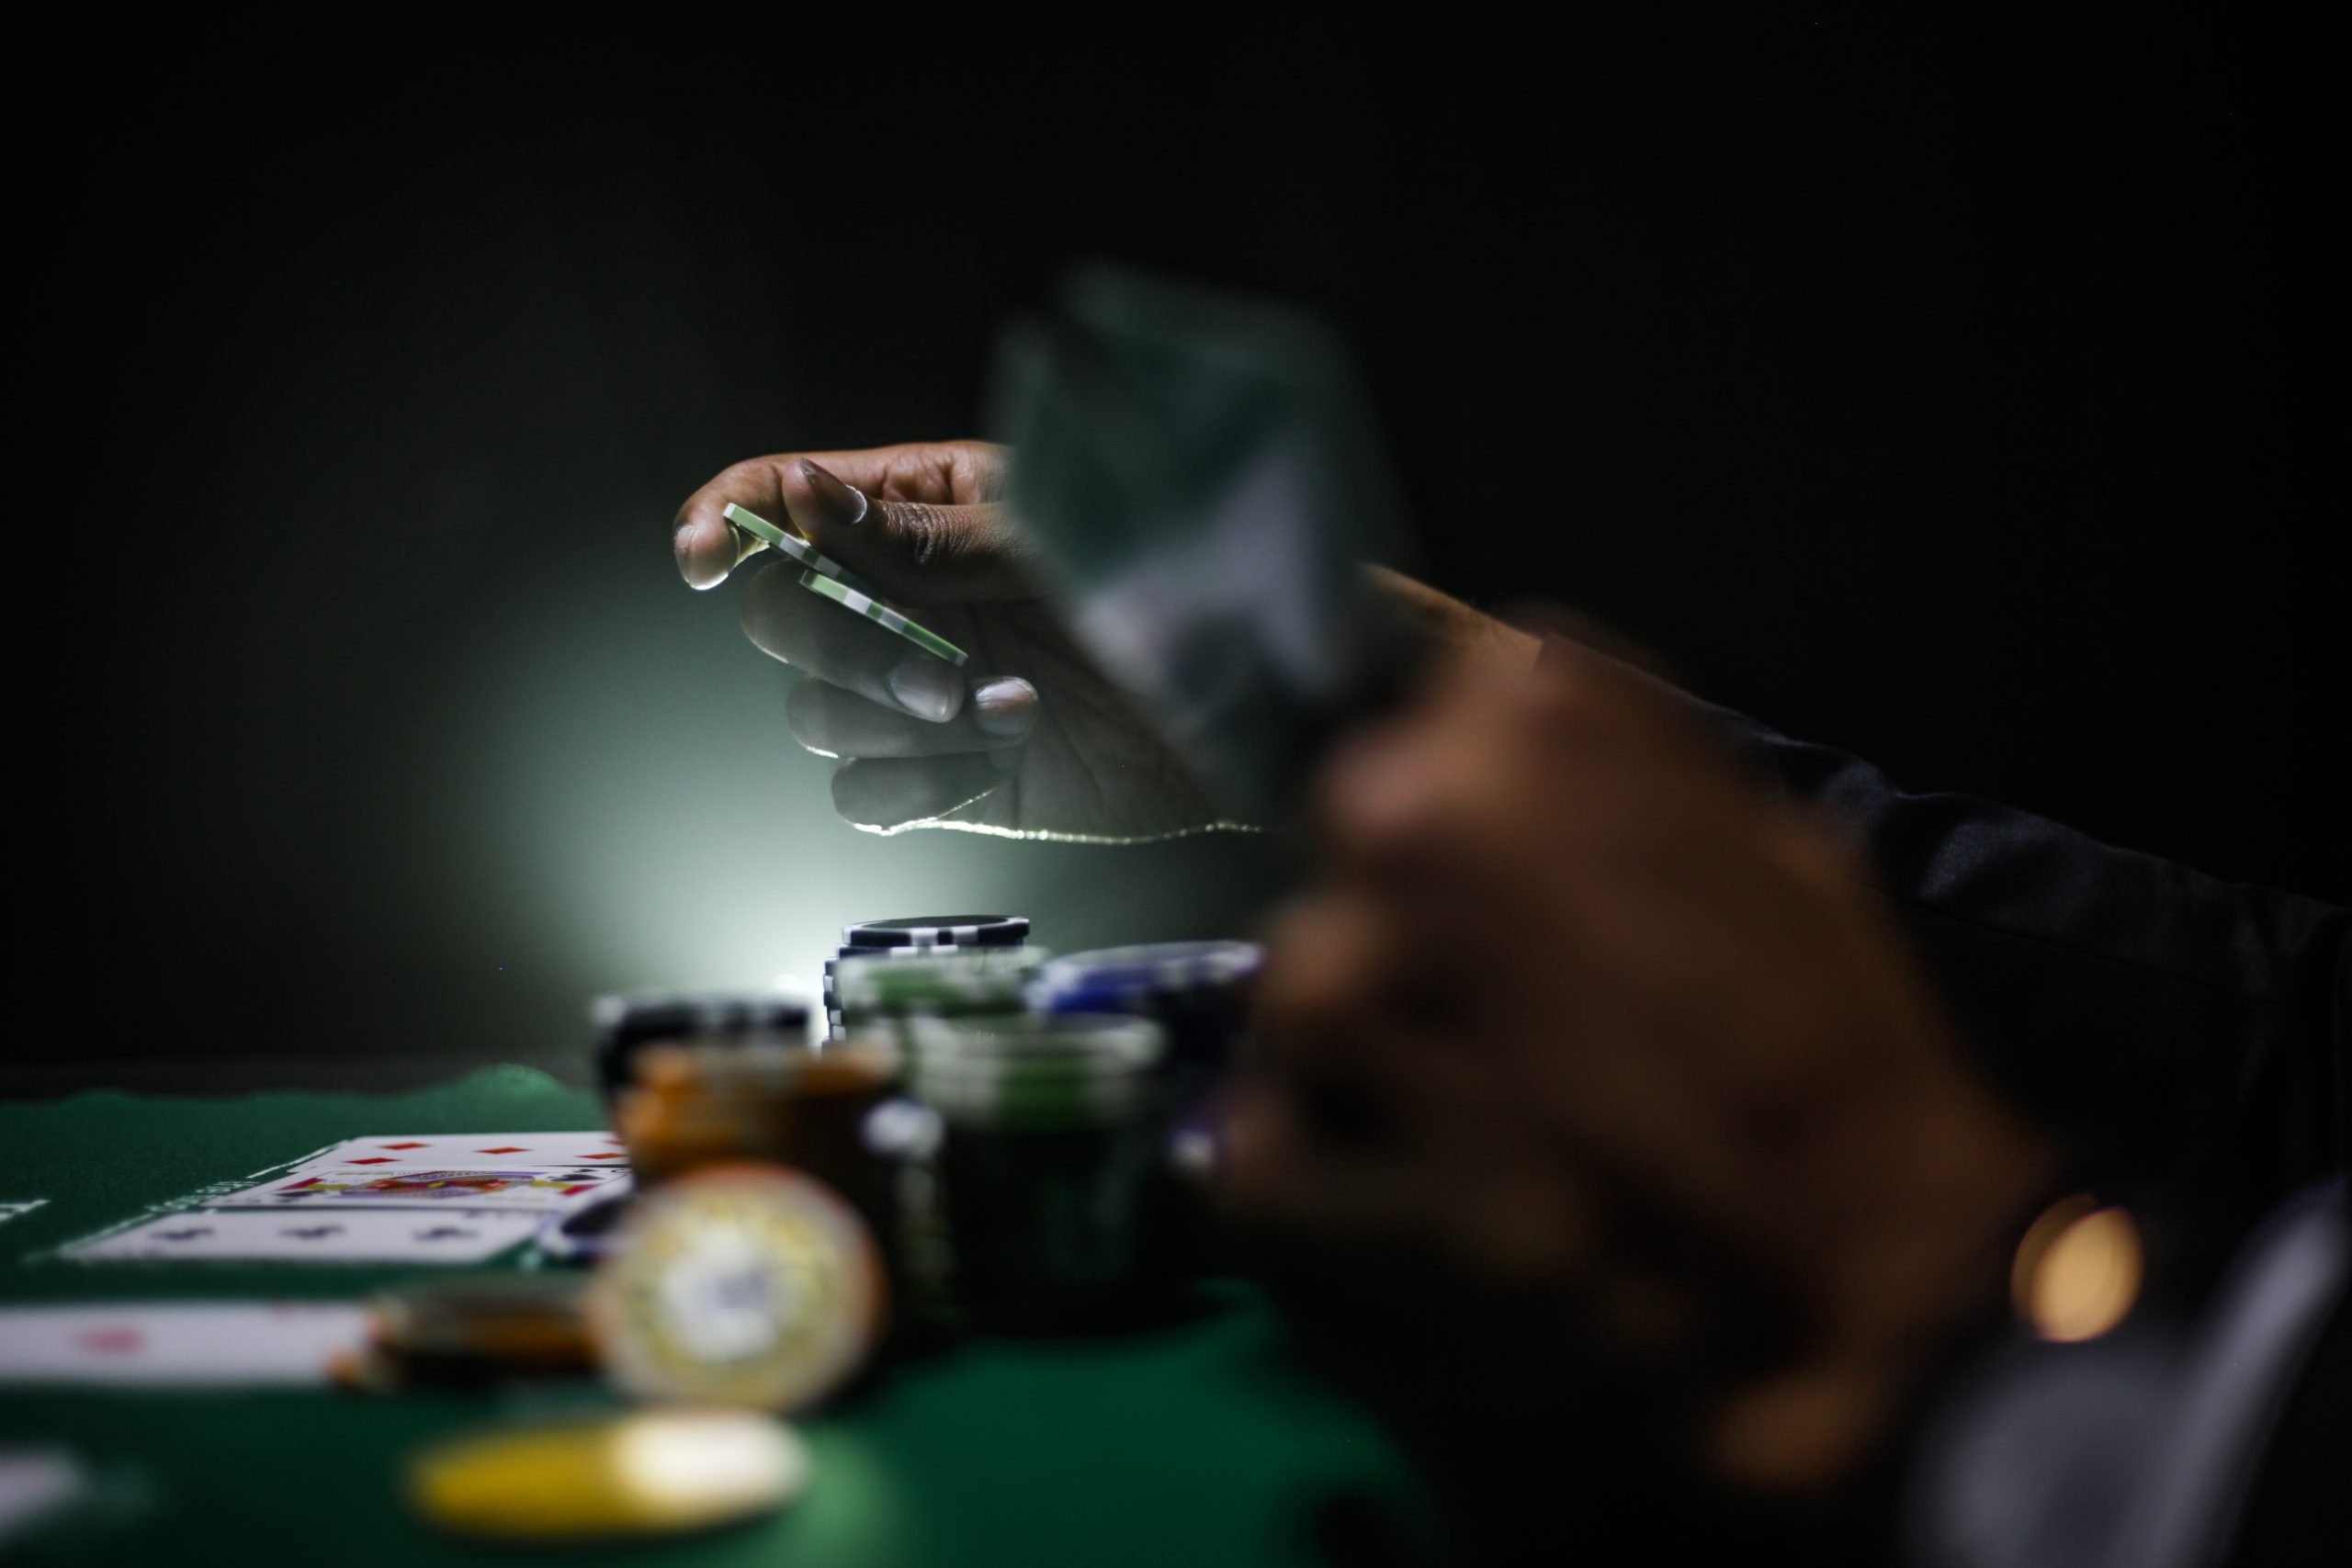 Tamil Nadu Passes Ordinance To Ban Online ‘Gambling’ Games Despite HC Striking Down Previous Ban